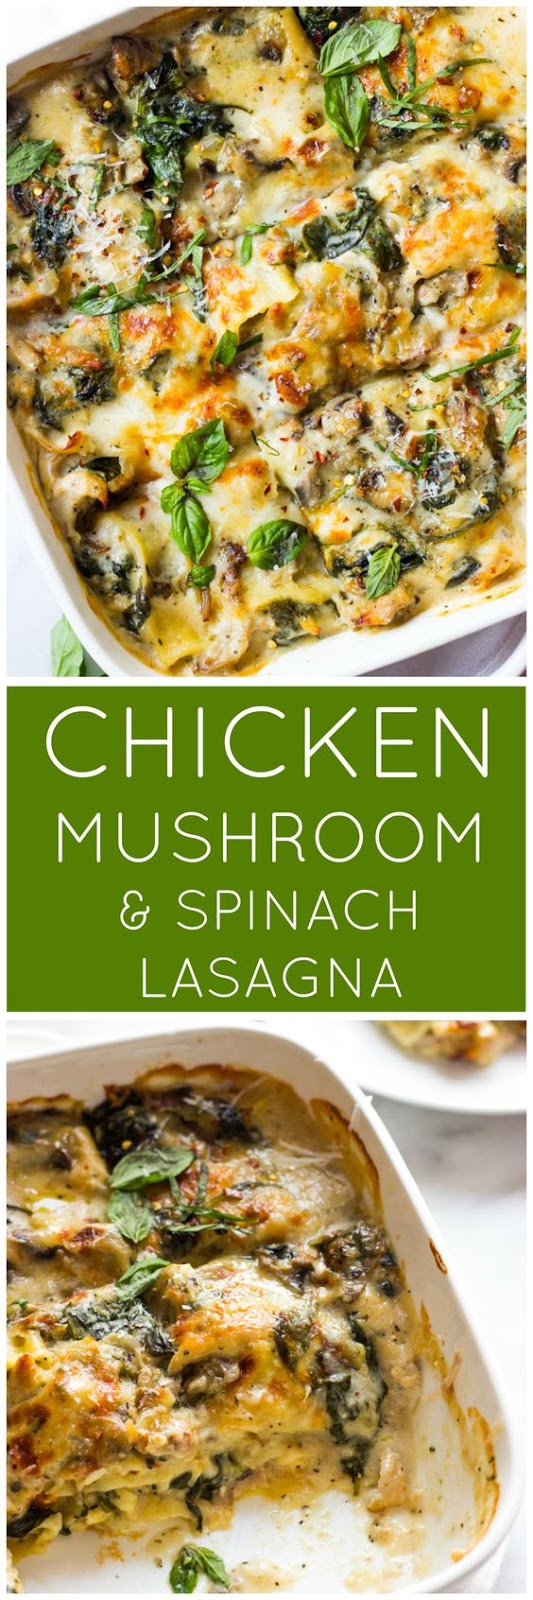 CHICKEN MUSHROOM AND SPINACH LASAGNA #chicken #mushroom #spinach #spinachlasagna #lasagna #lasagnarecipes #chickenrecipes